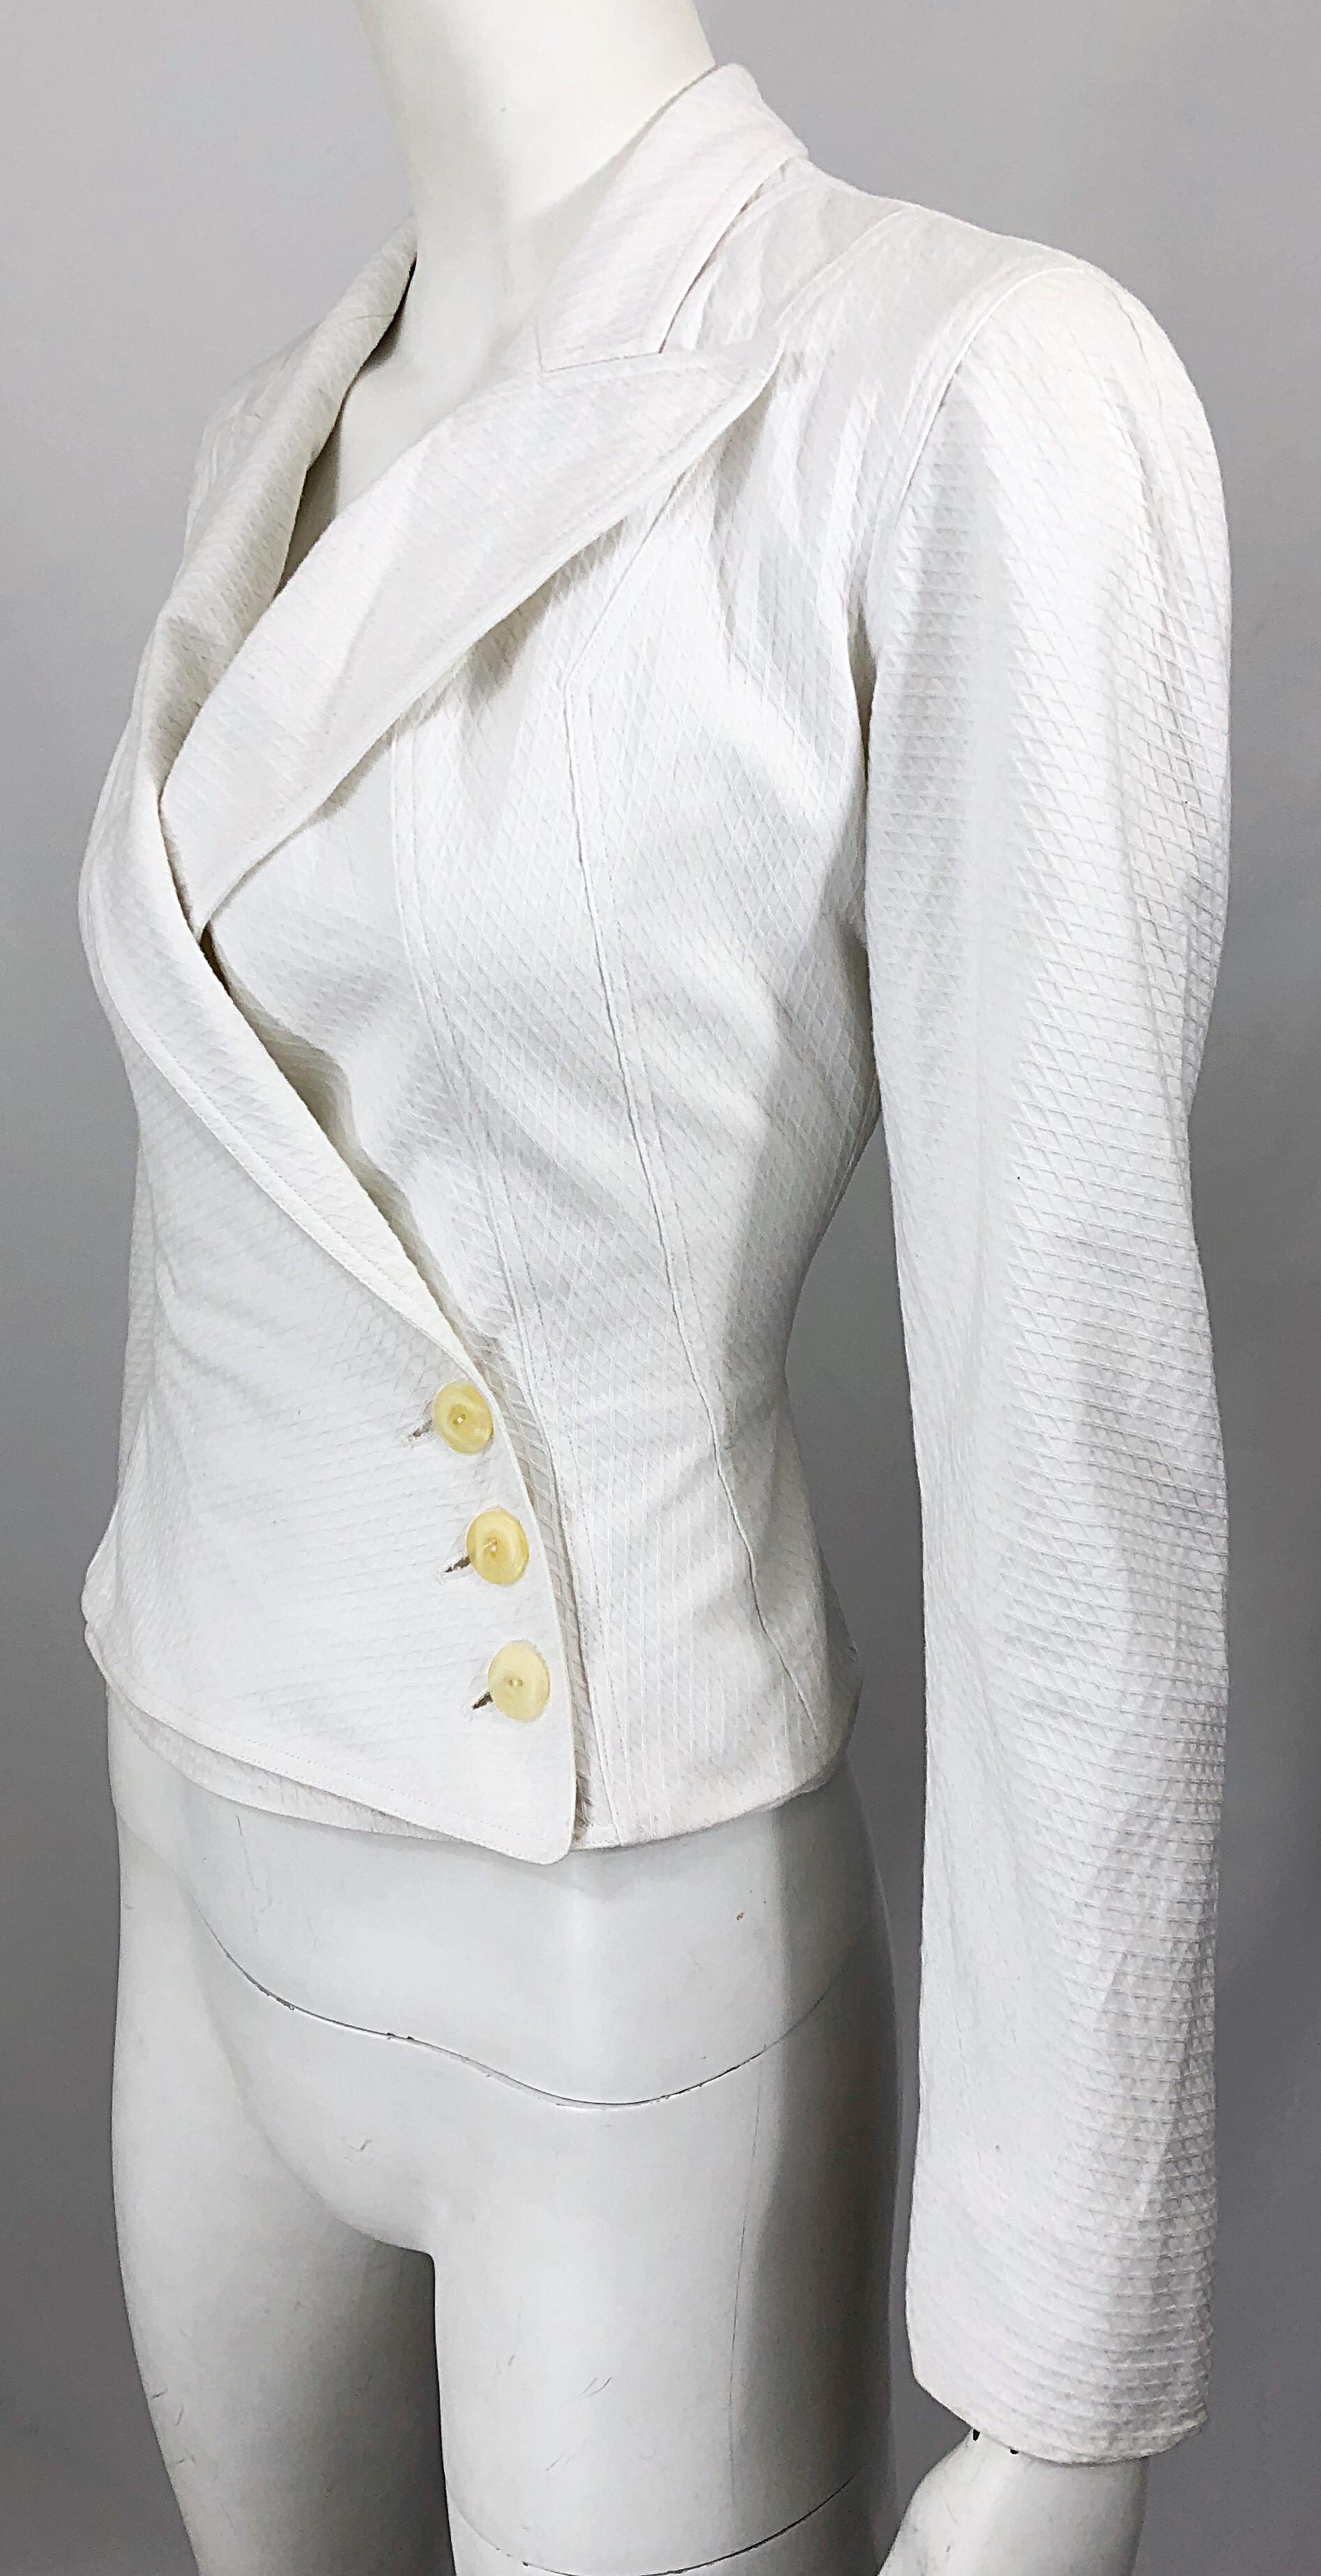 1980s Azzedine Alaia White Pique Cotton Vintage 80s Cropped Blazer Jacket Size 2 For Sale 5